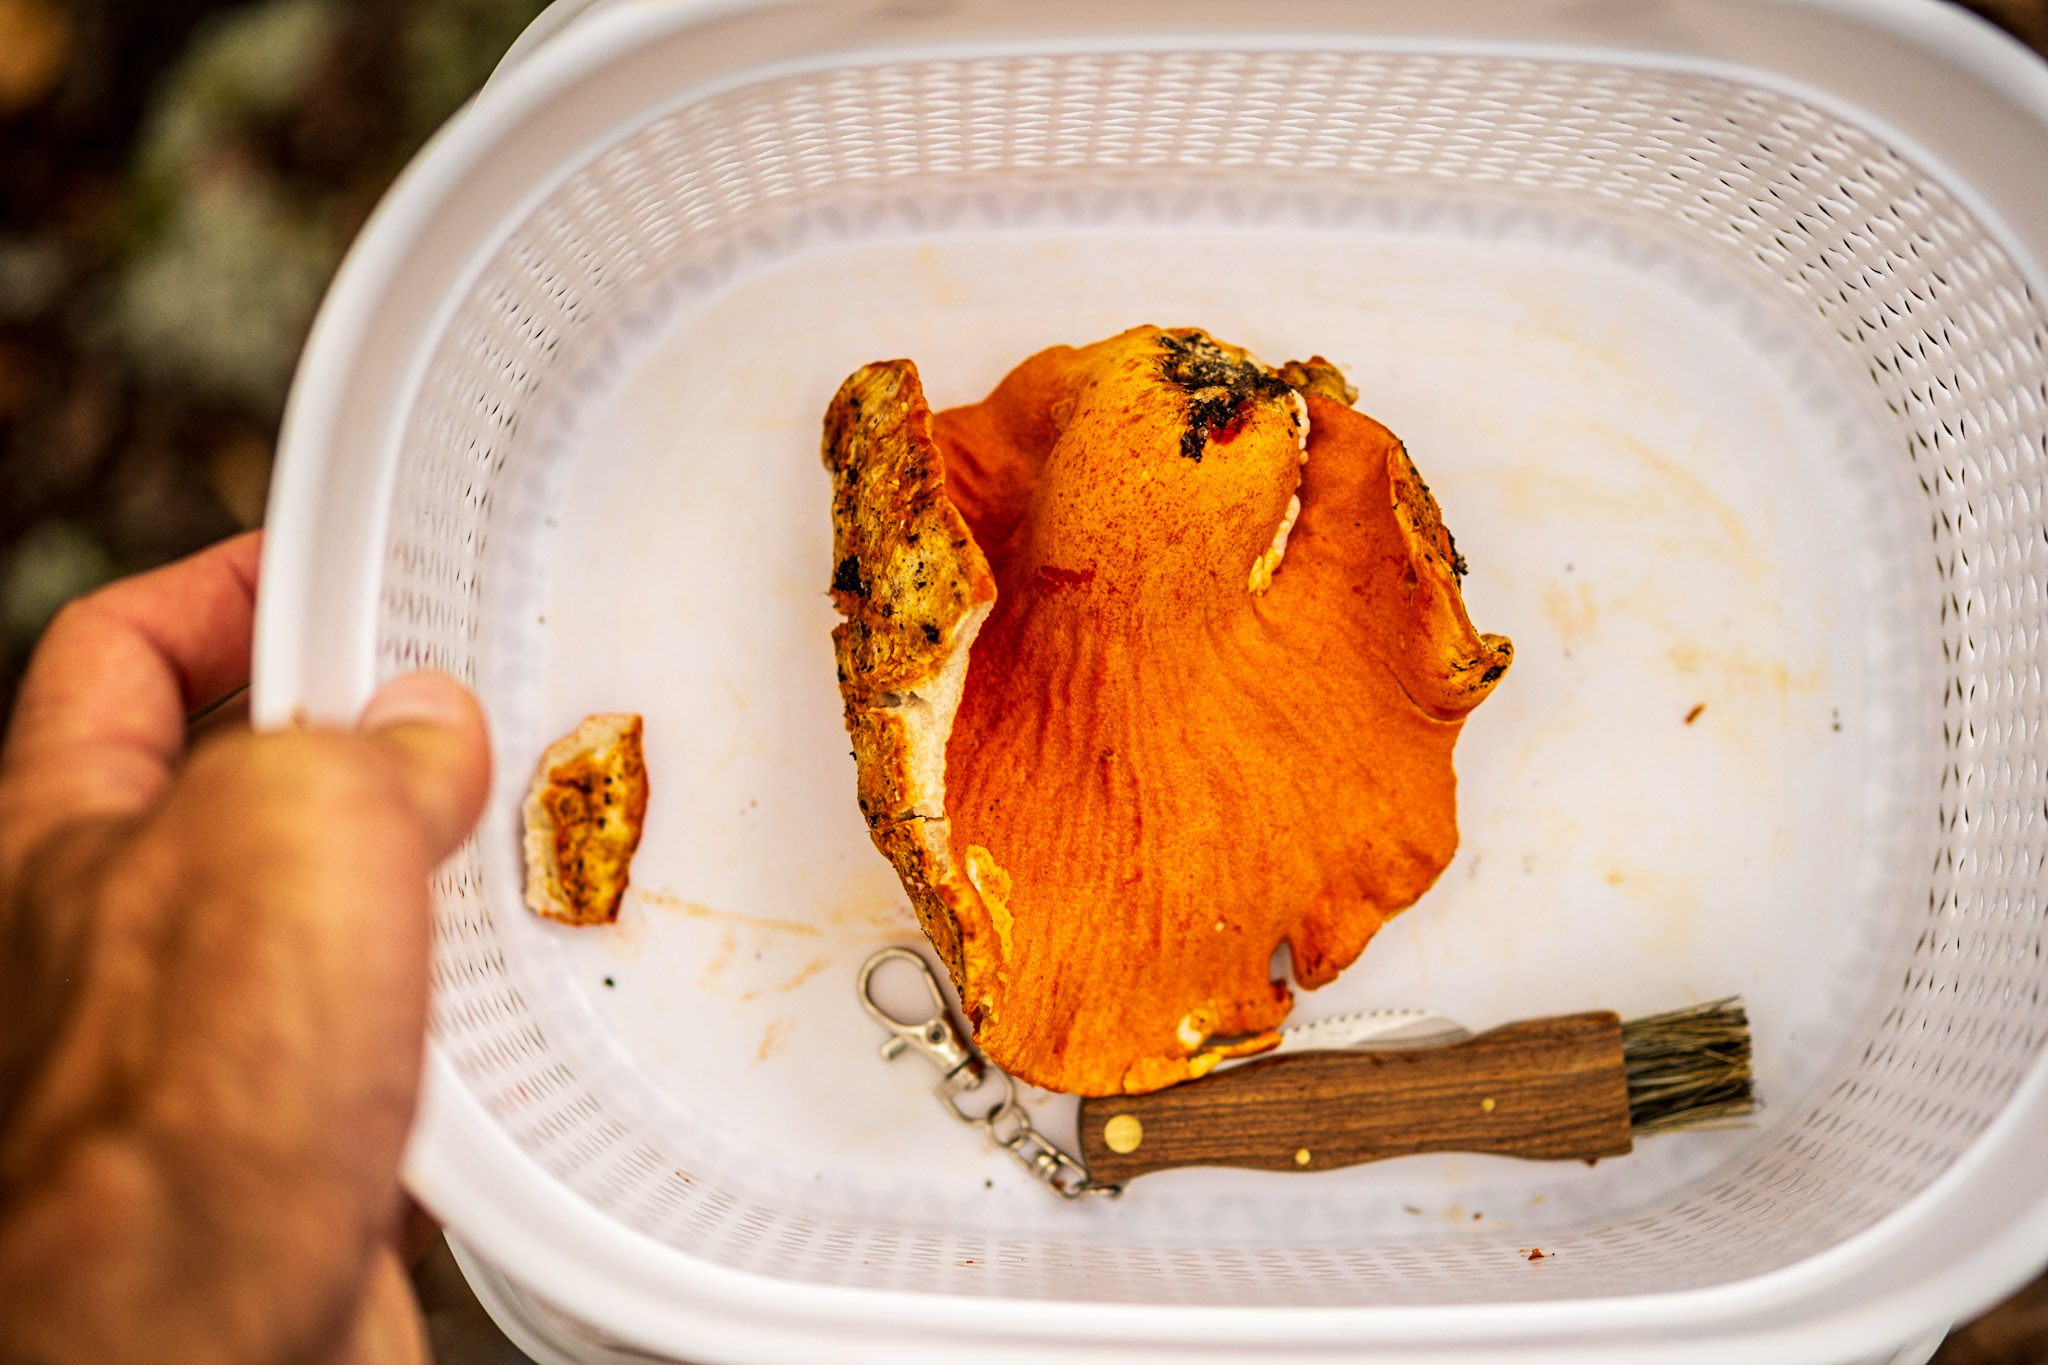 Lobster mushroom in a harvesting basket with mushroom knife